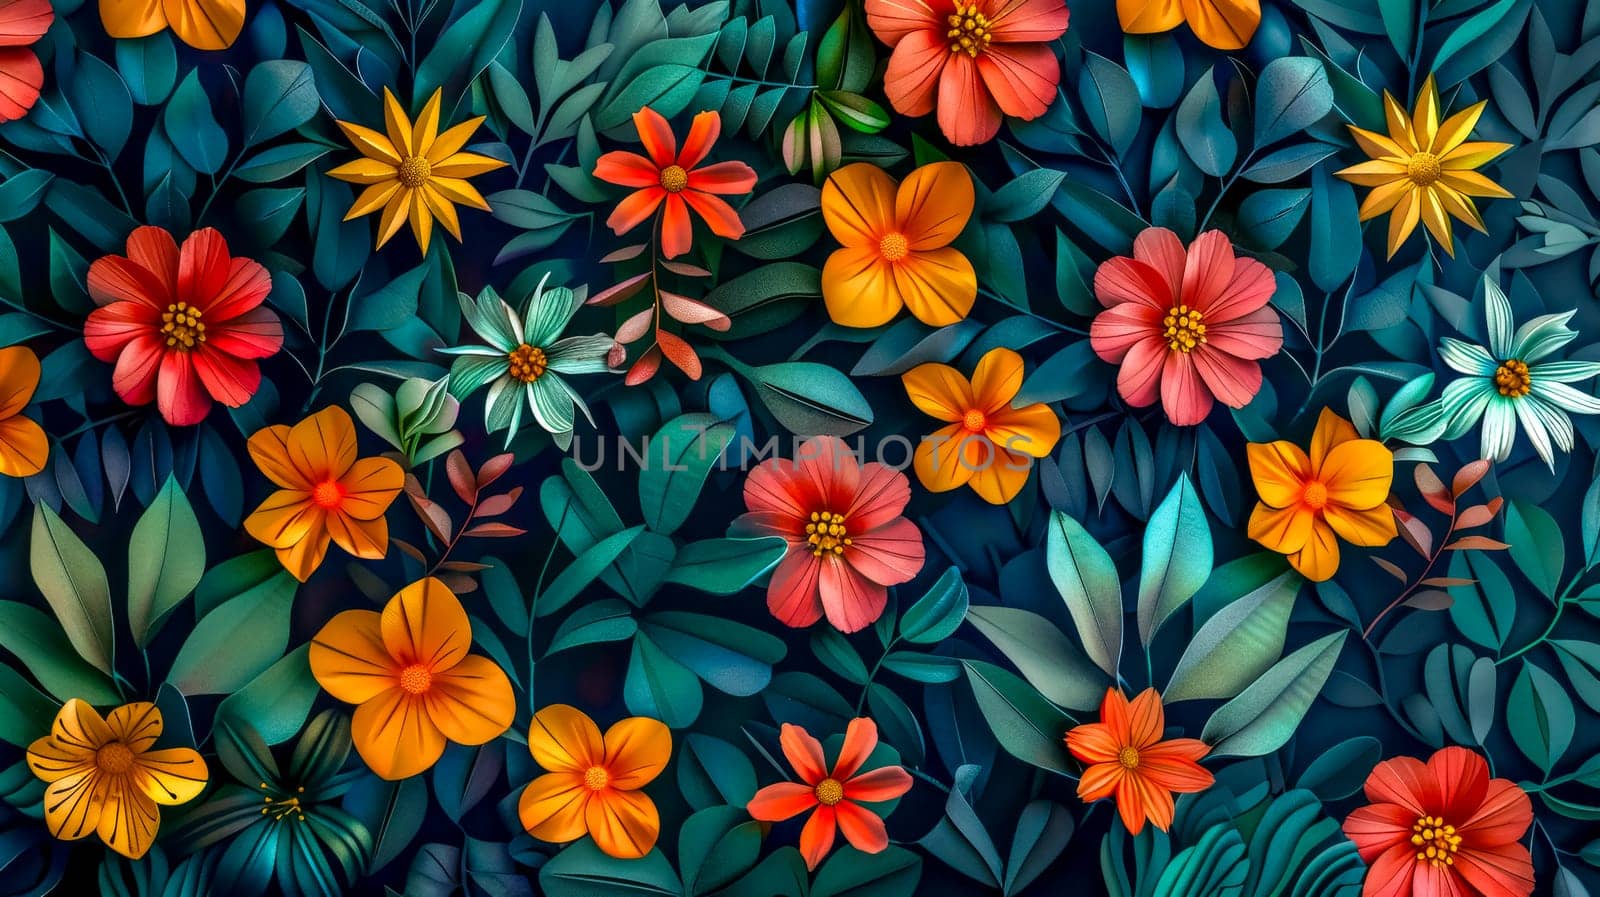 Vibrant paper flower artwork background by Edophoto